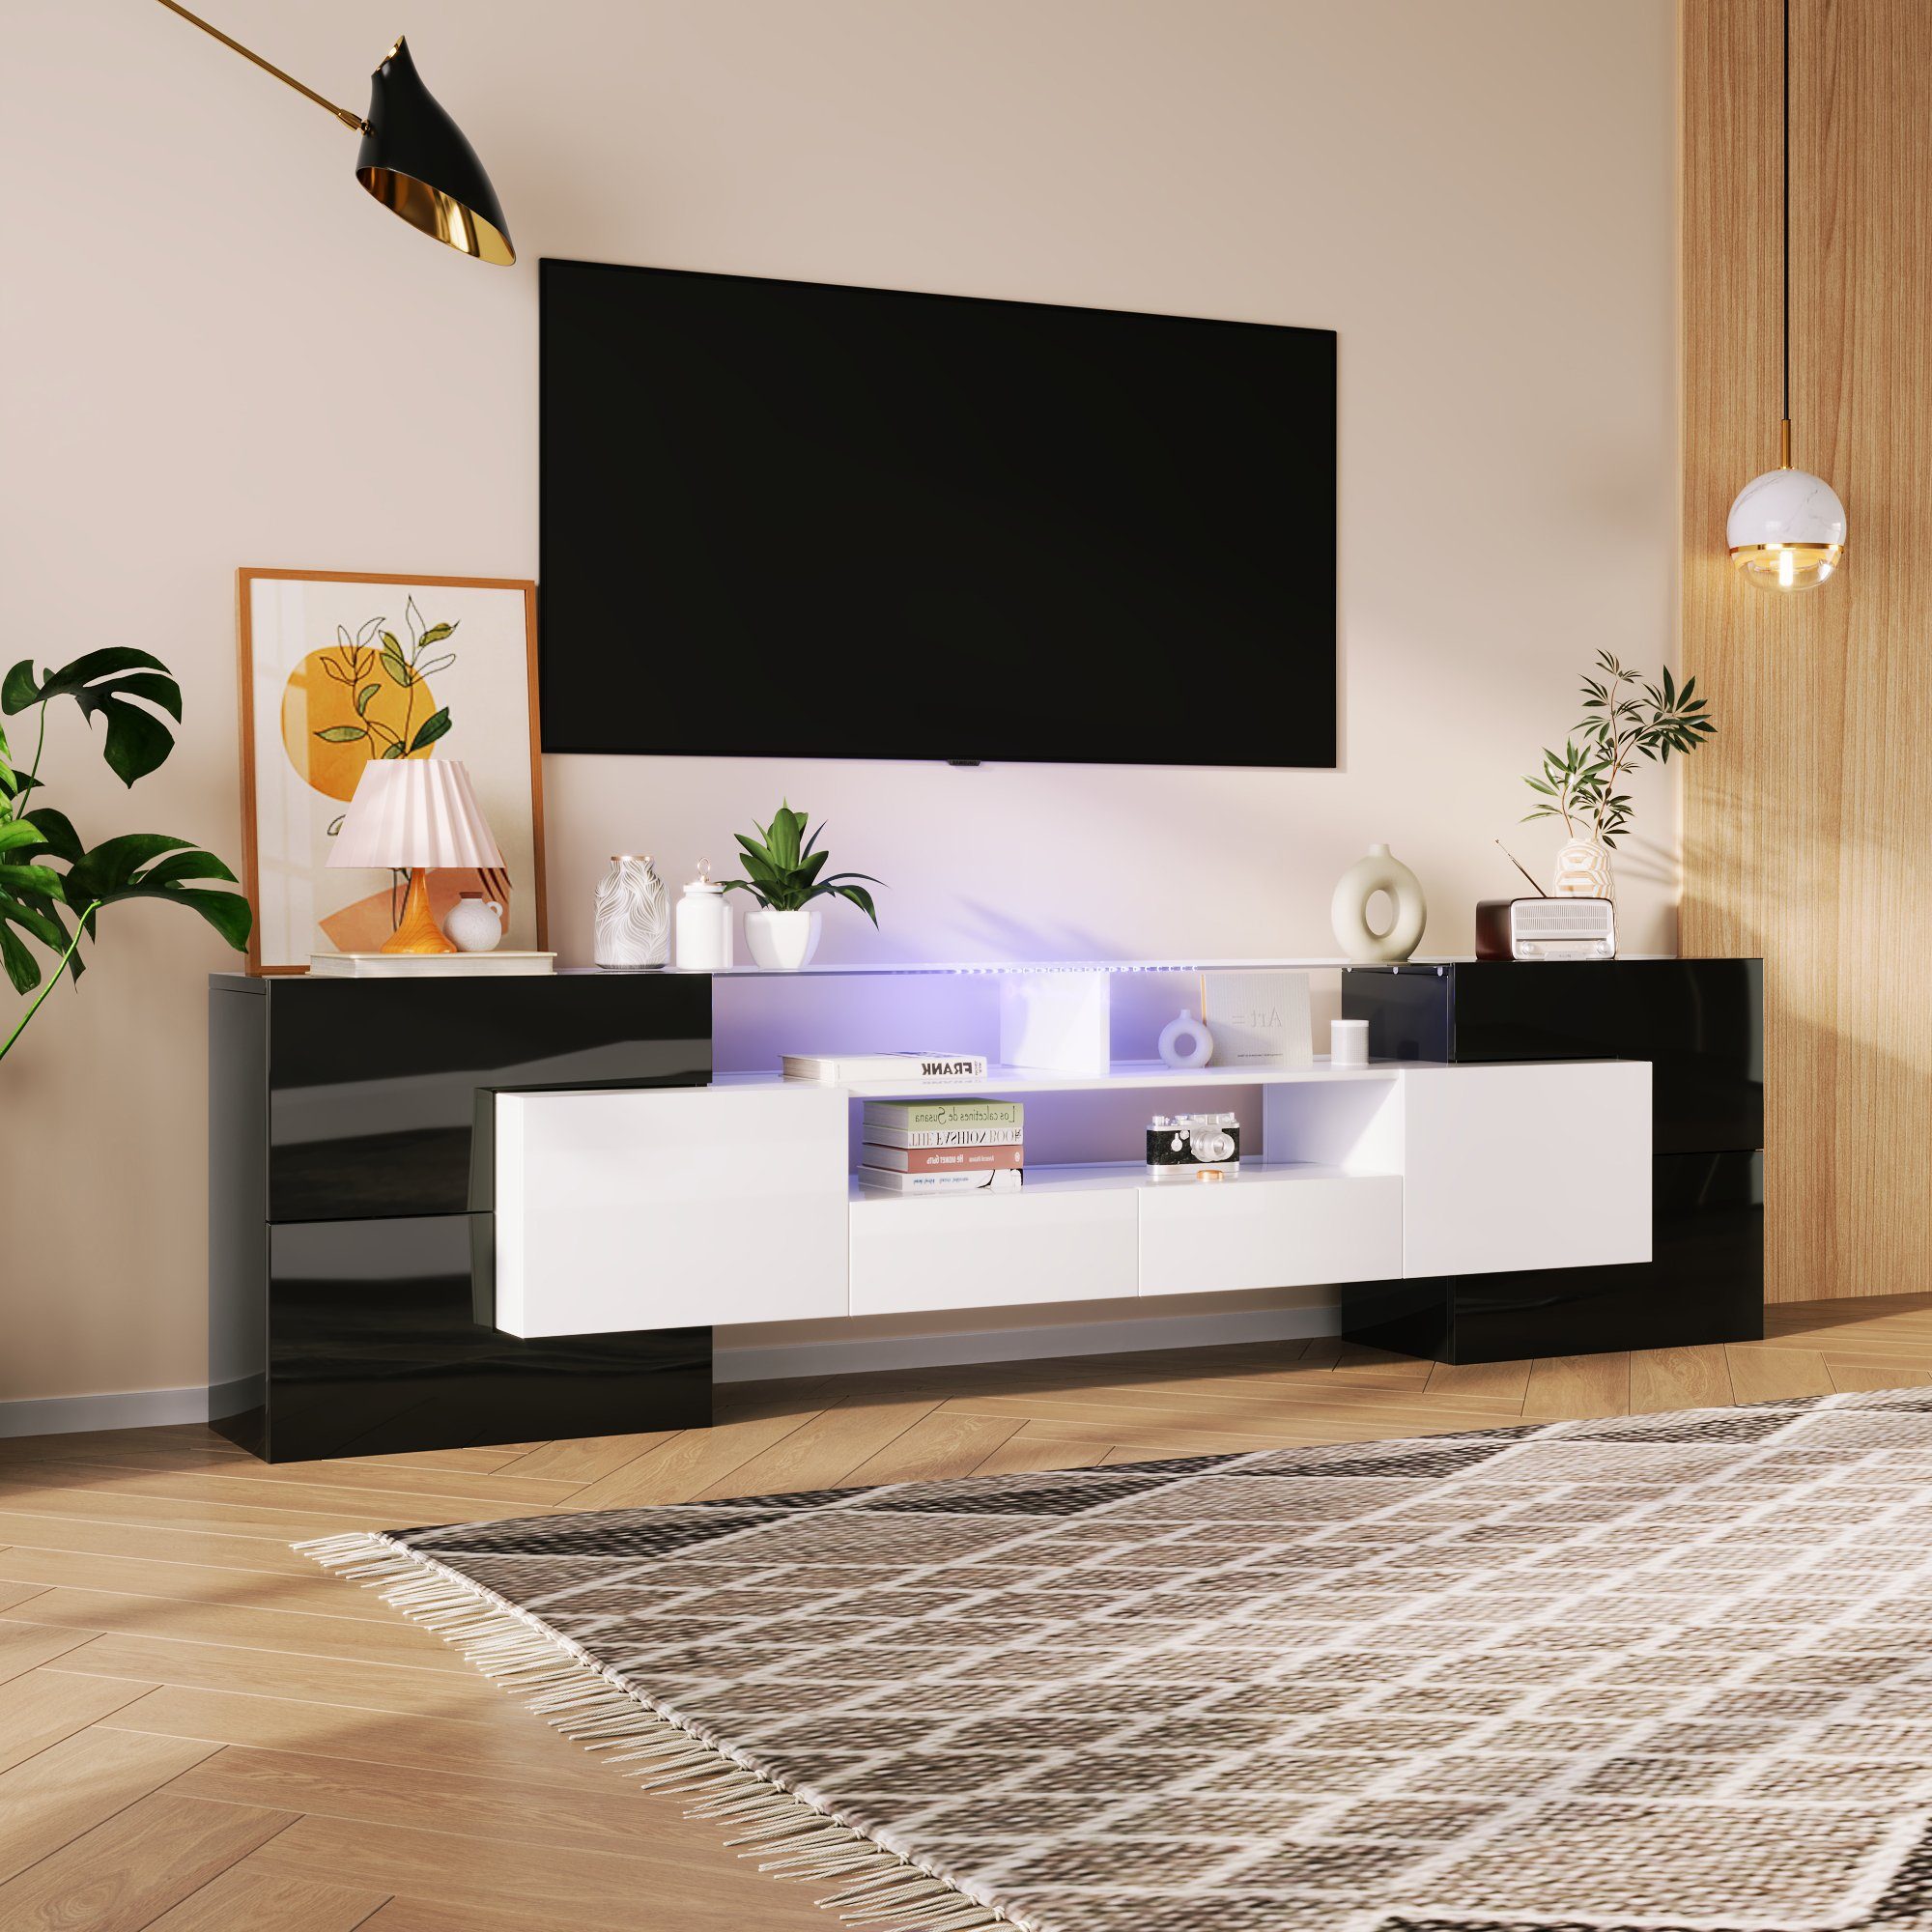 Ulife Lowboard TV-Schrank Fernsehtisch TV Board TV- Lowboard Glasoberfläche, LED-Beleuchtung